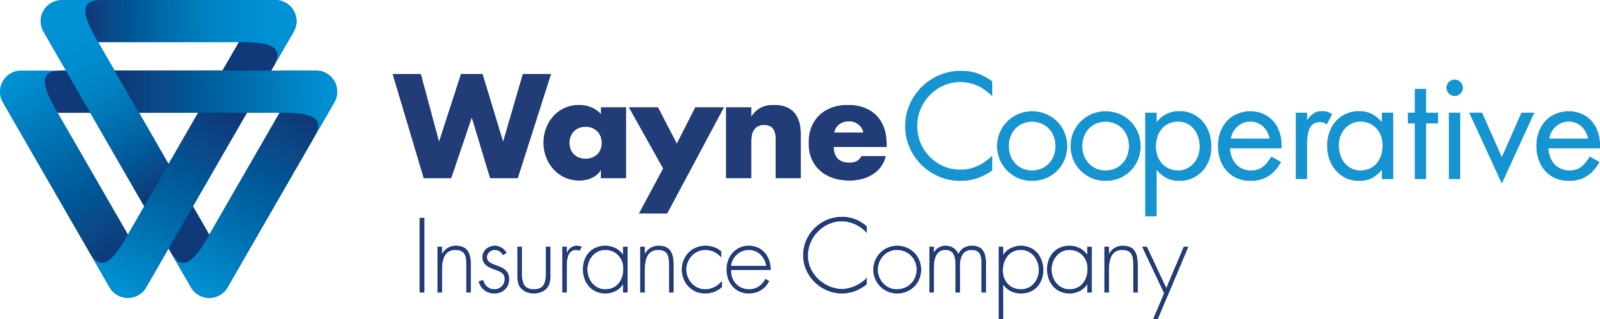 wayne cooperative logo